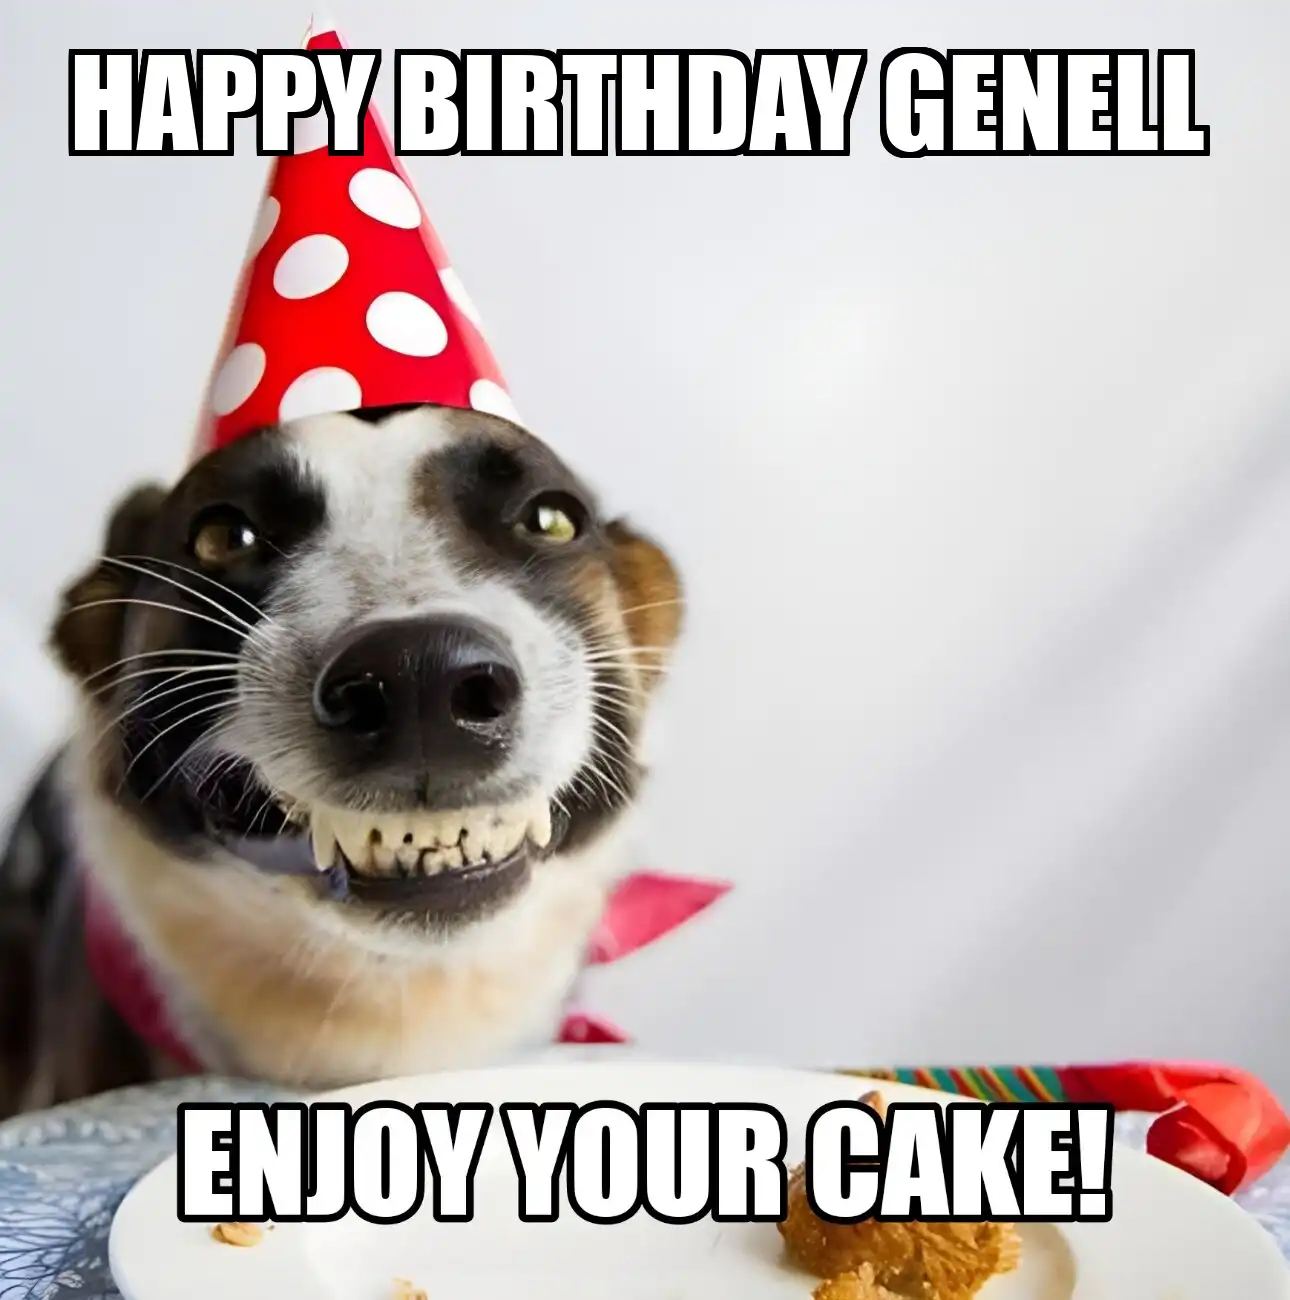 Happy Birthday Genell Enjoy Your Cake Dog Meme